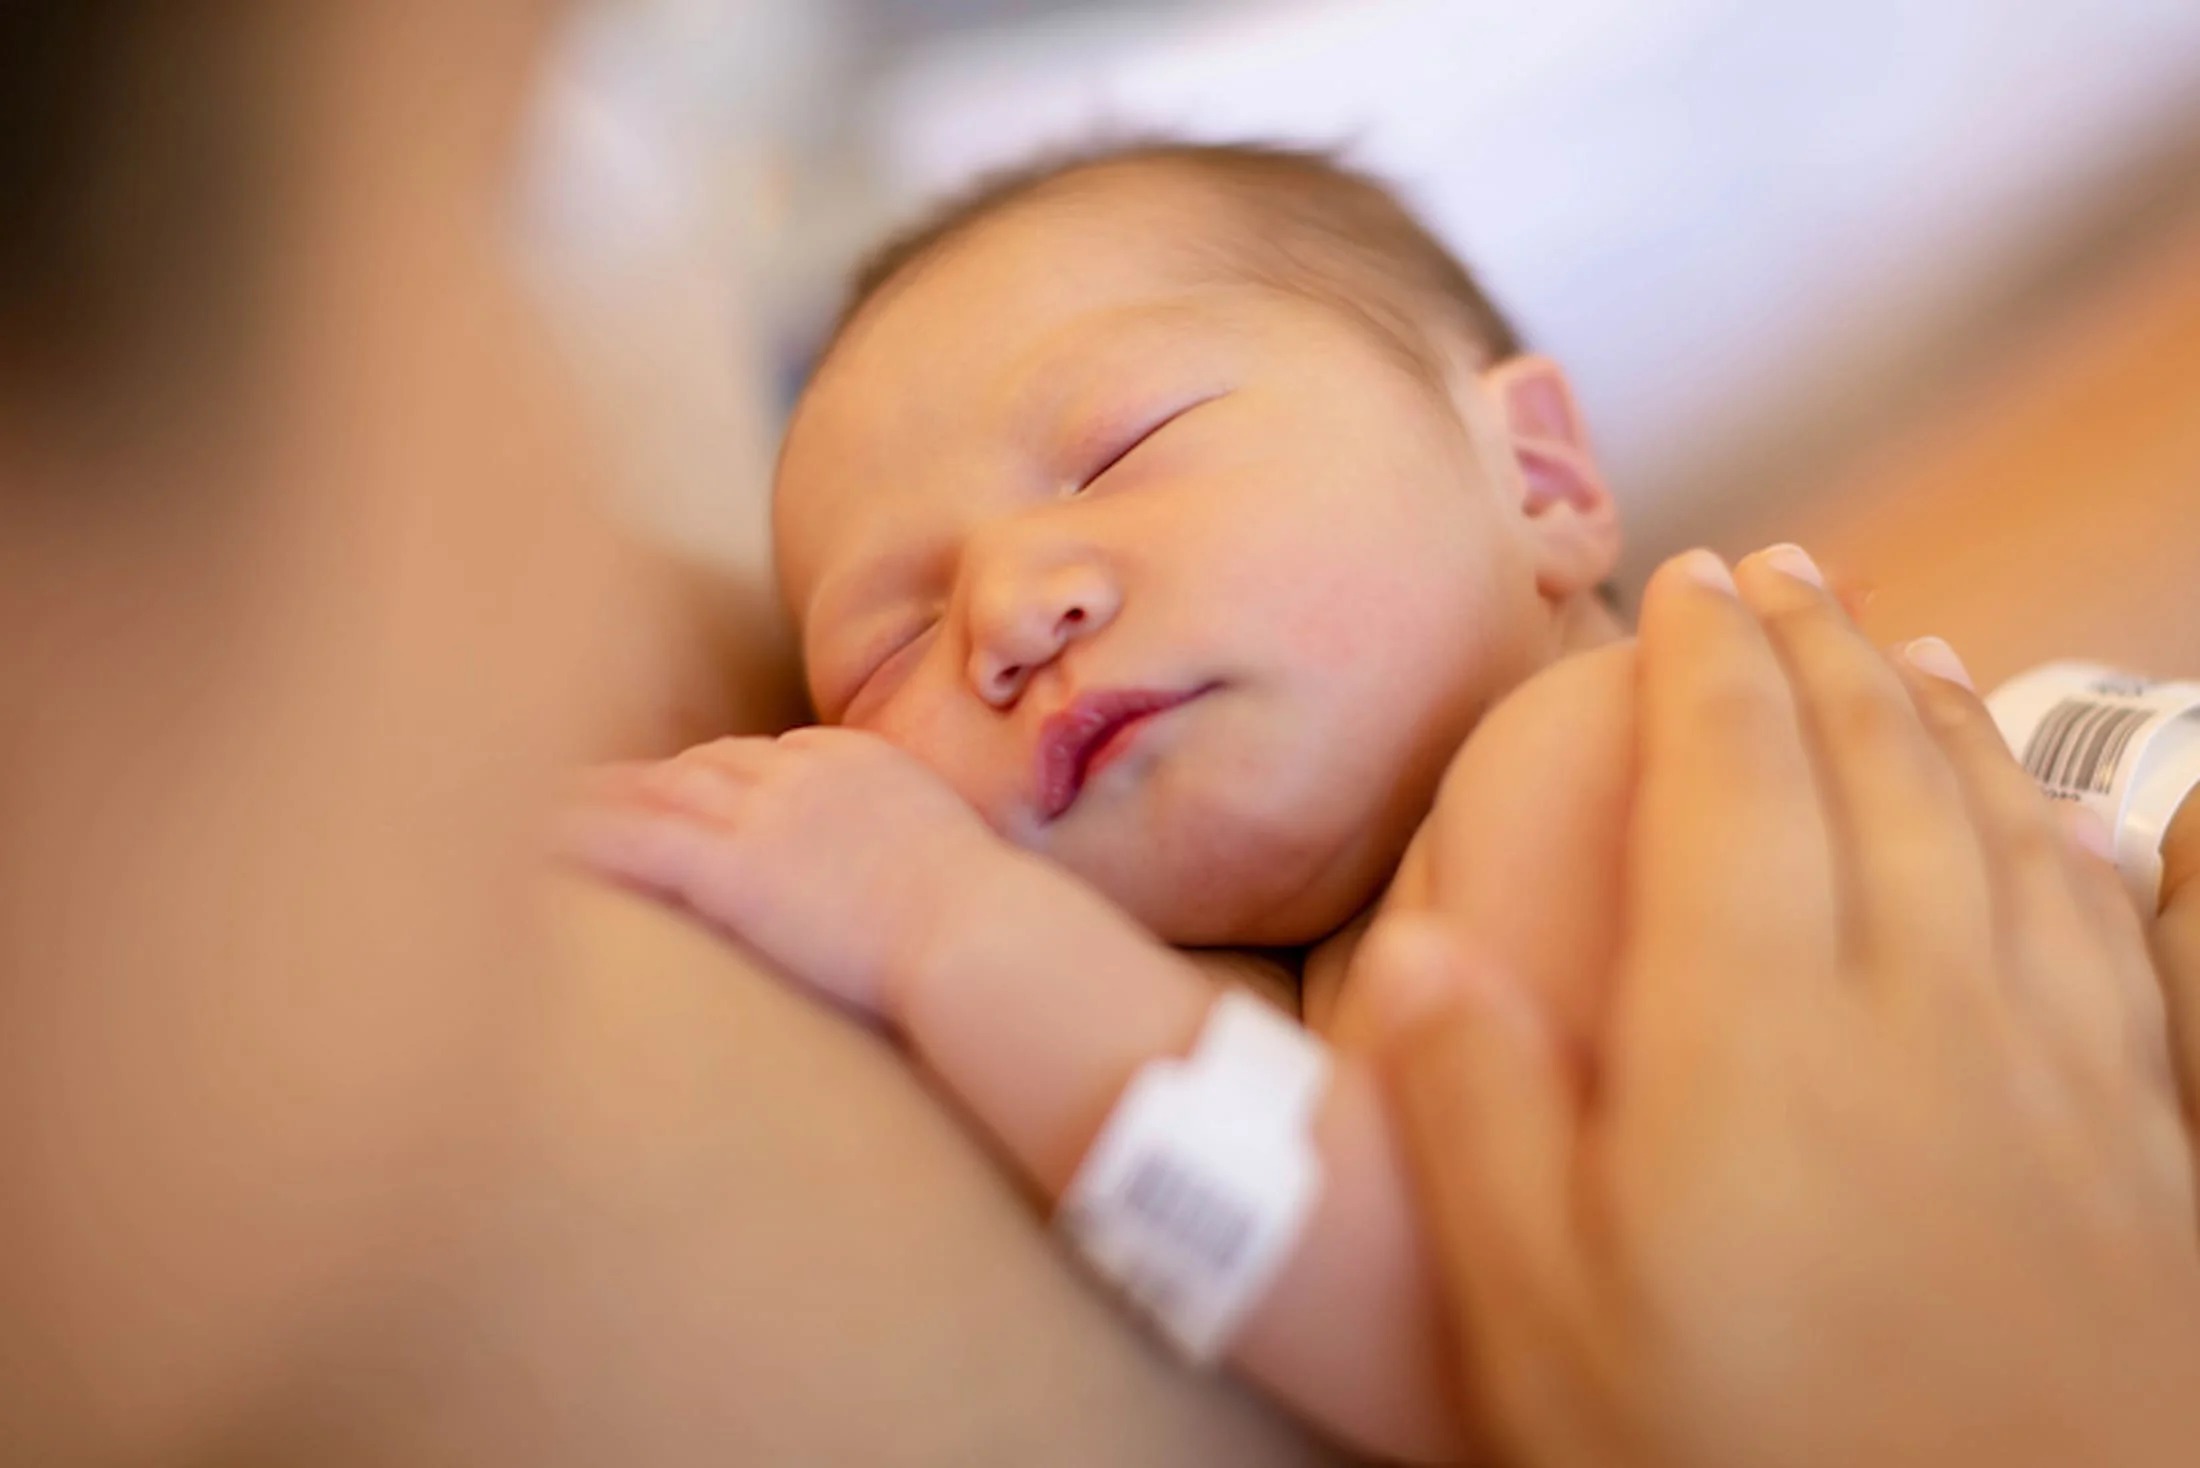 How Do I Add My Newborn To My Medical Insurance?